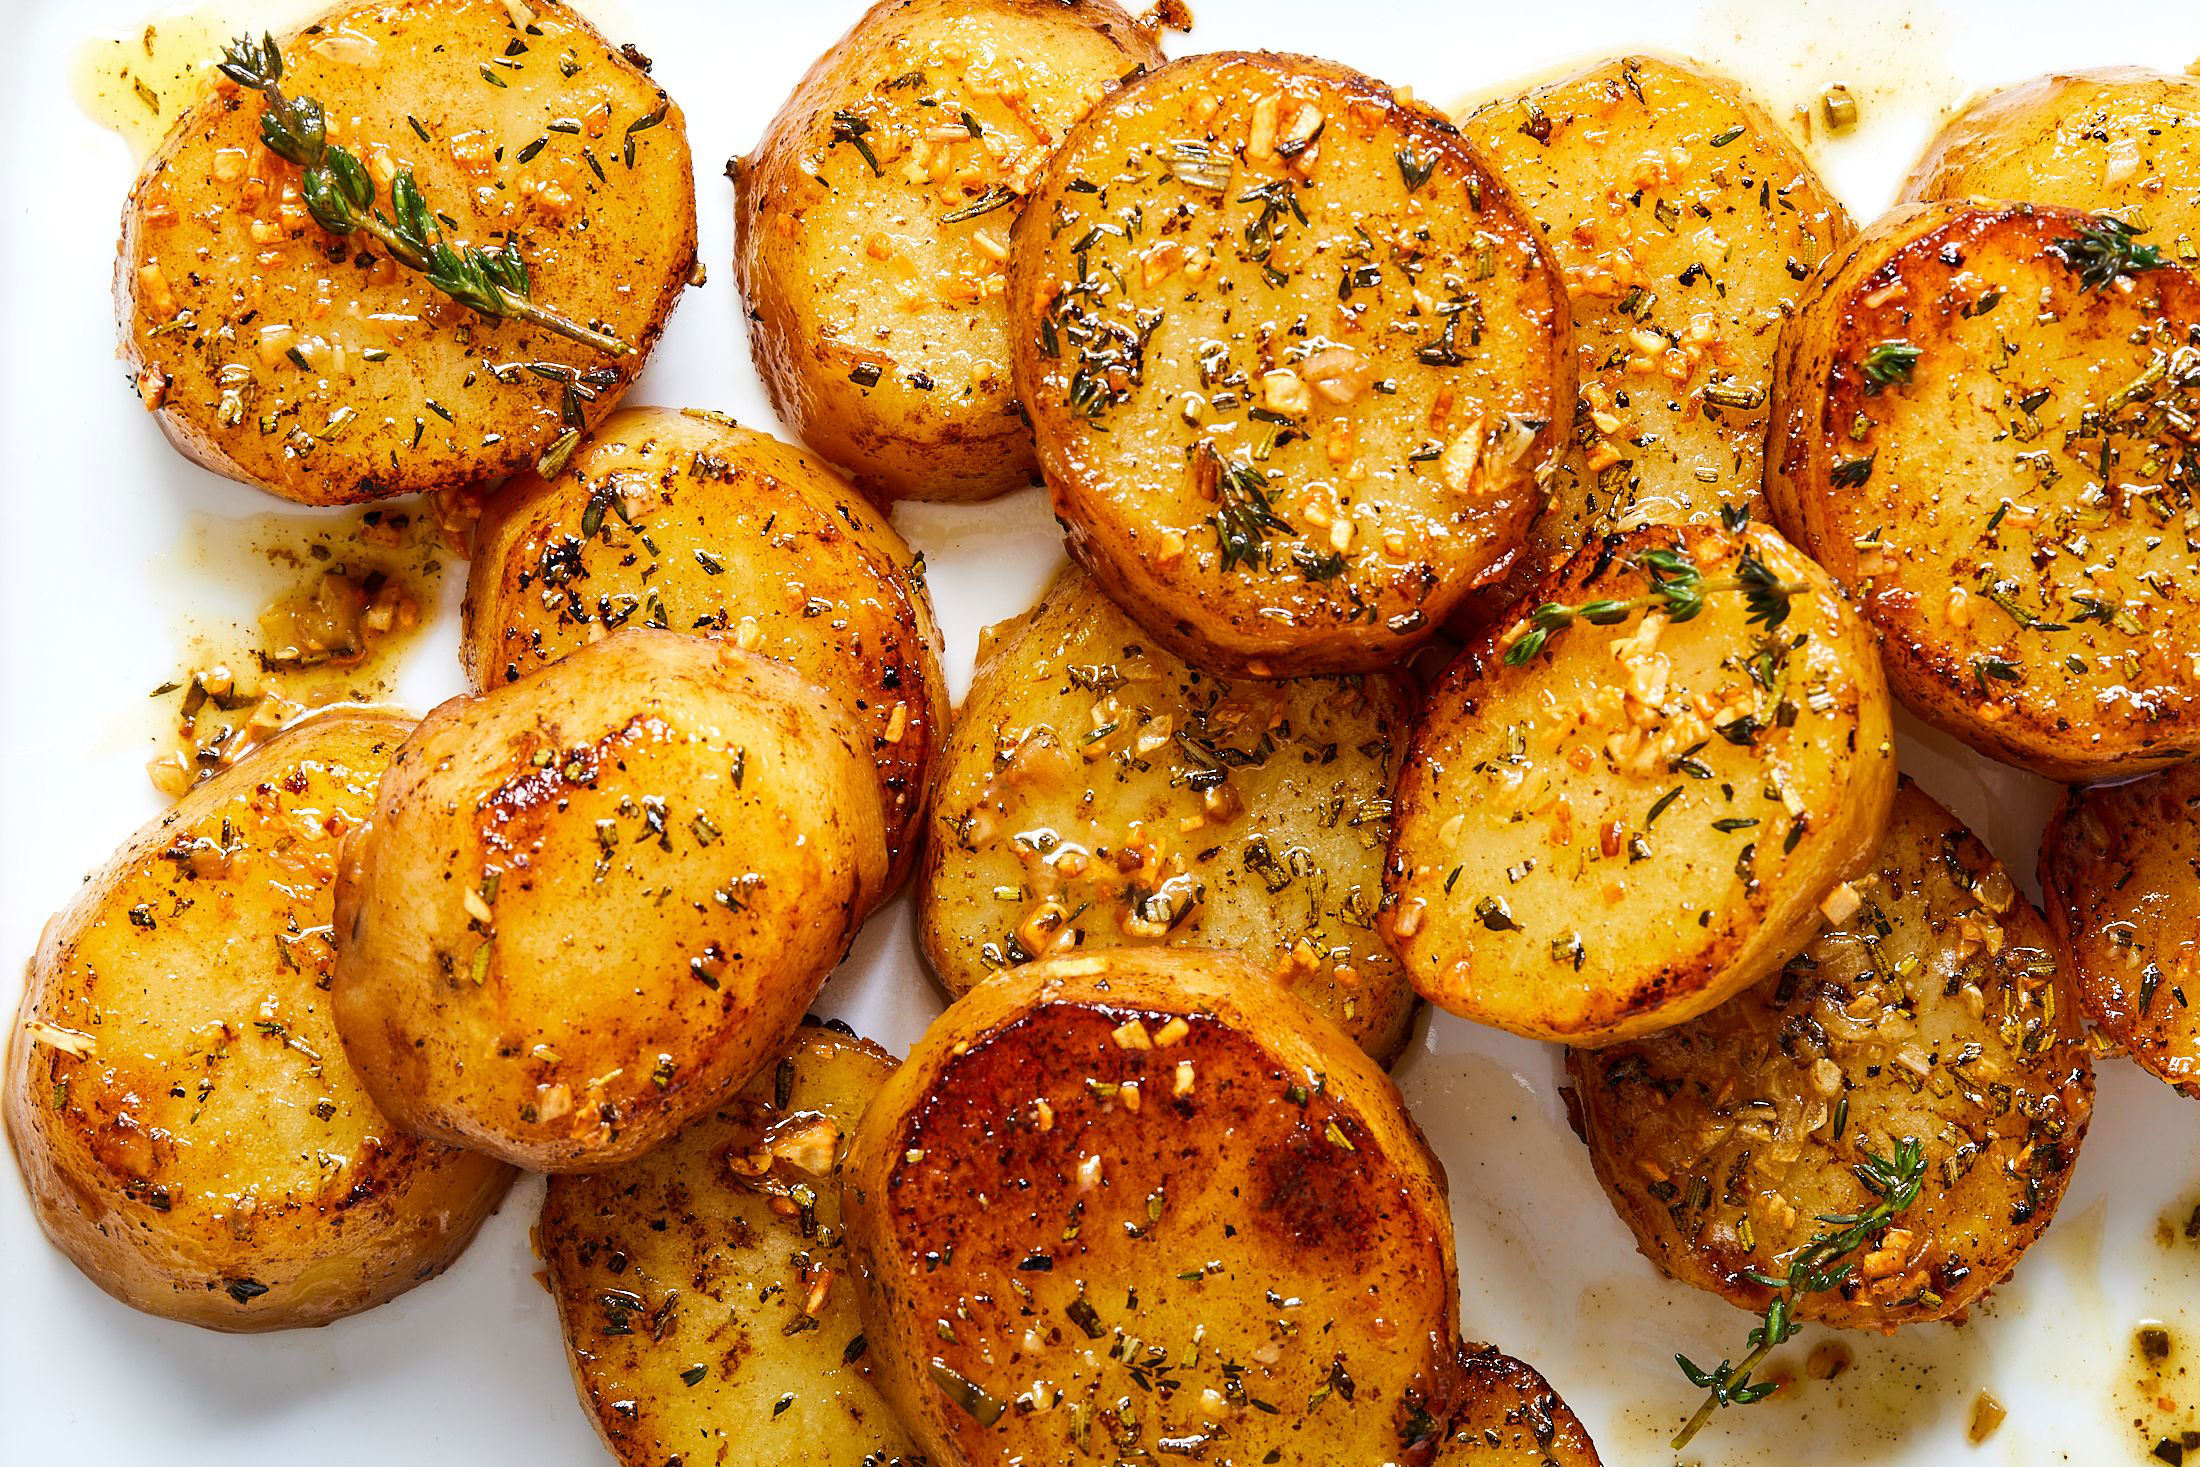 French Onion Baked Potatoes Recipe